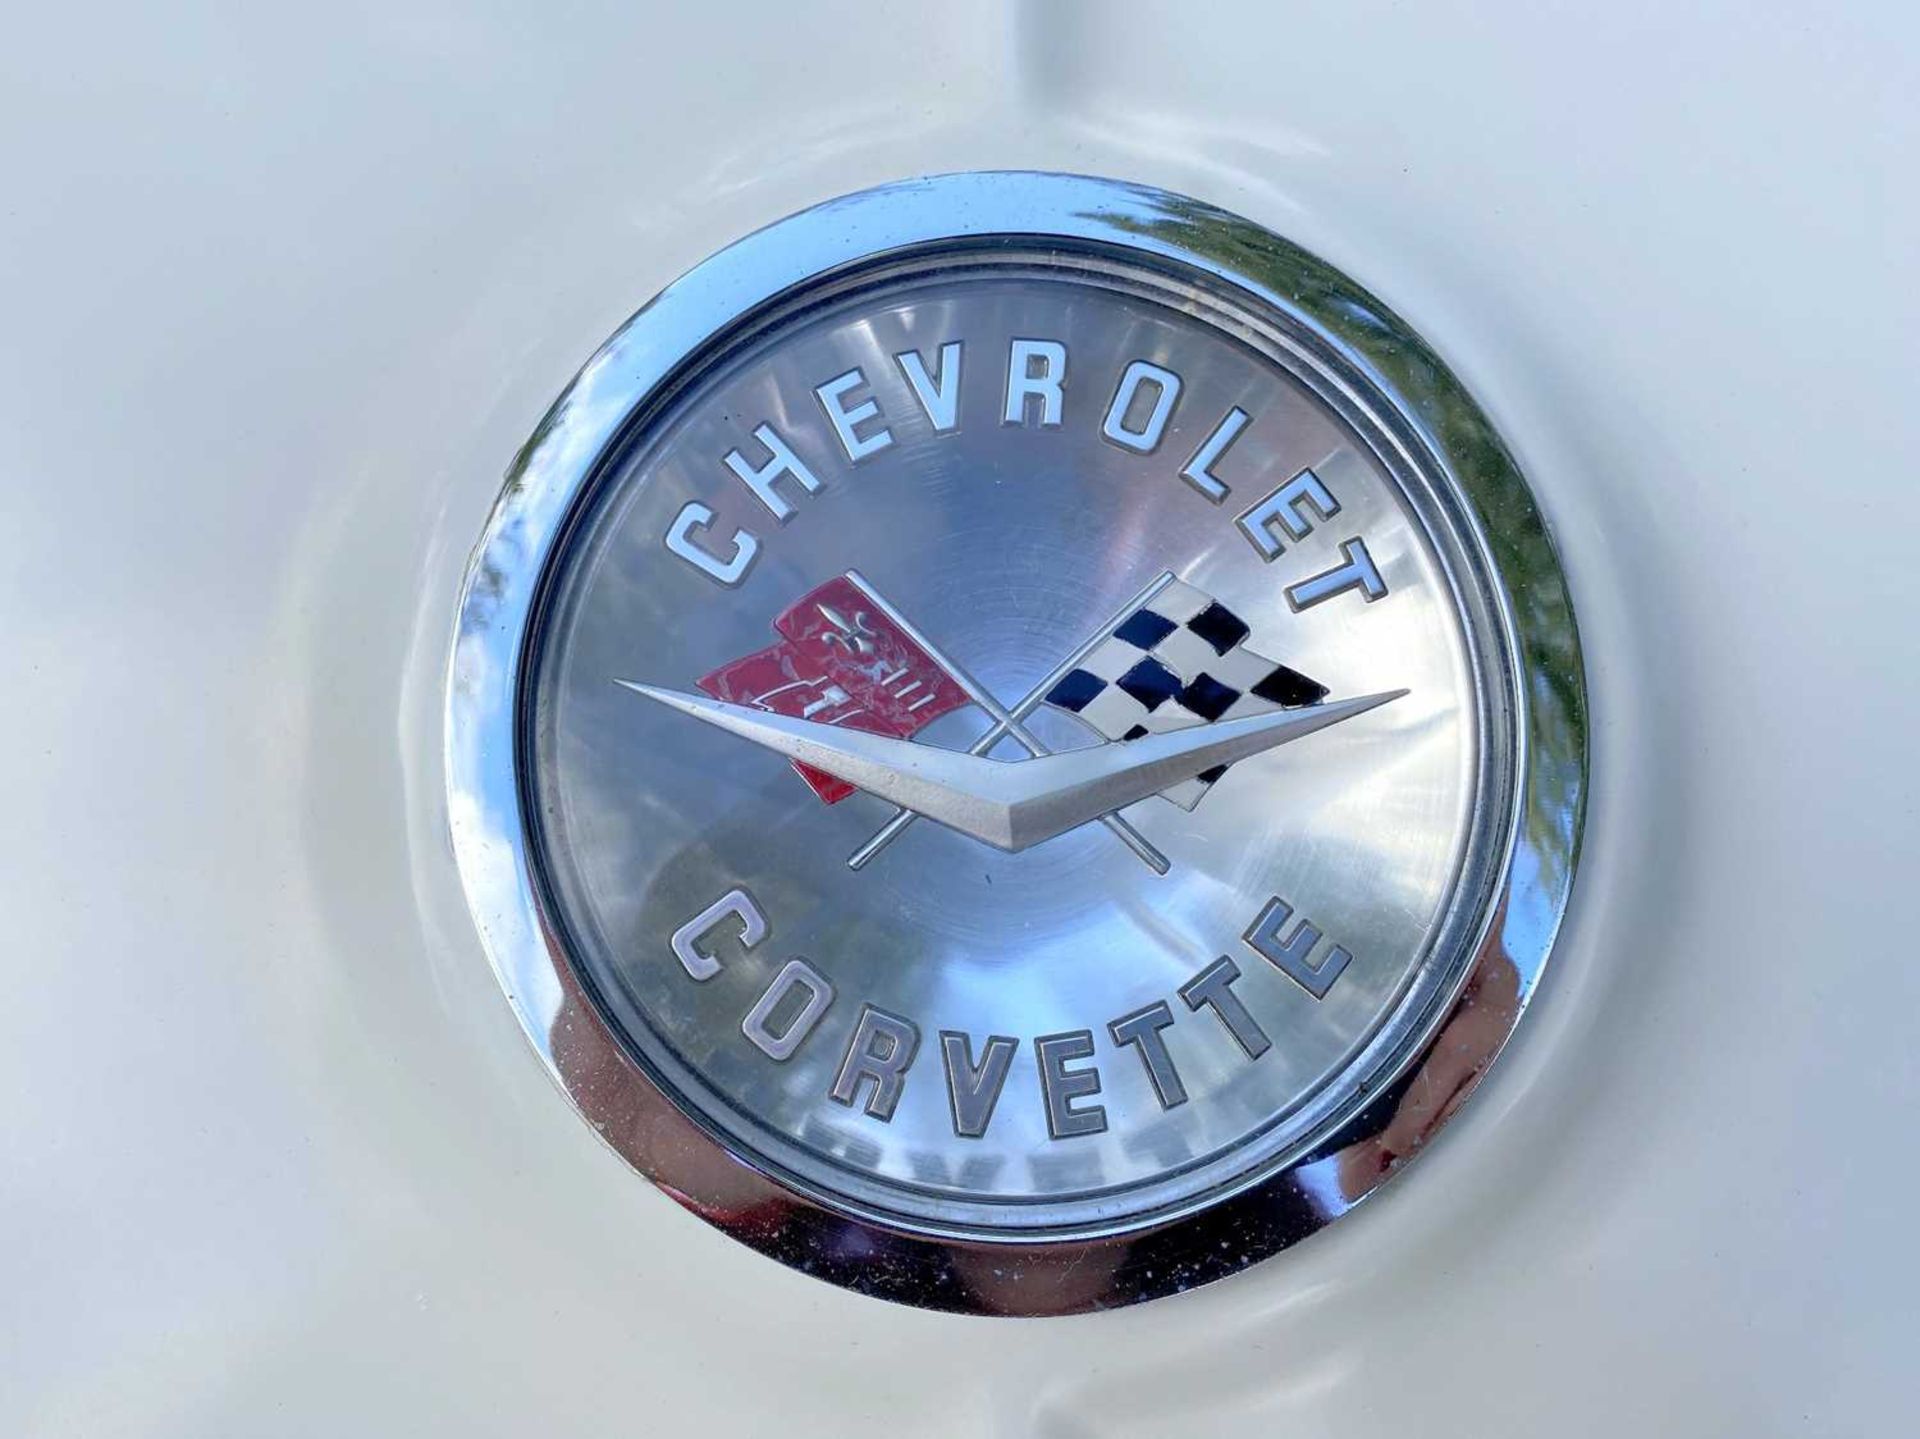 1961 Chevrolet Corvette Engine upgraded to a 5.4L V8 - Image 93 of 95